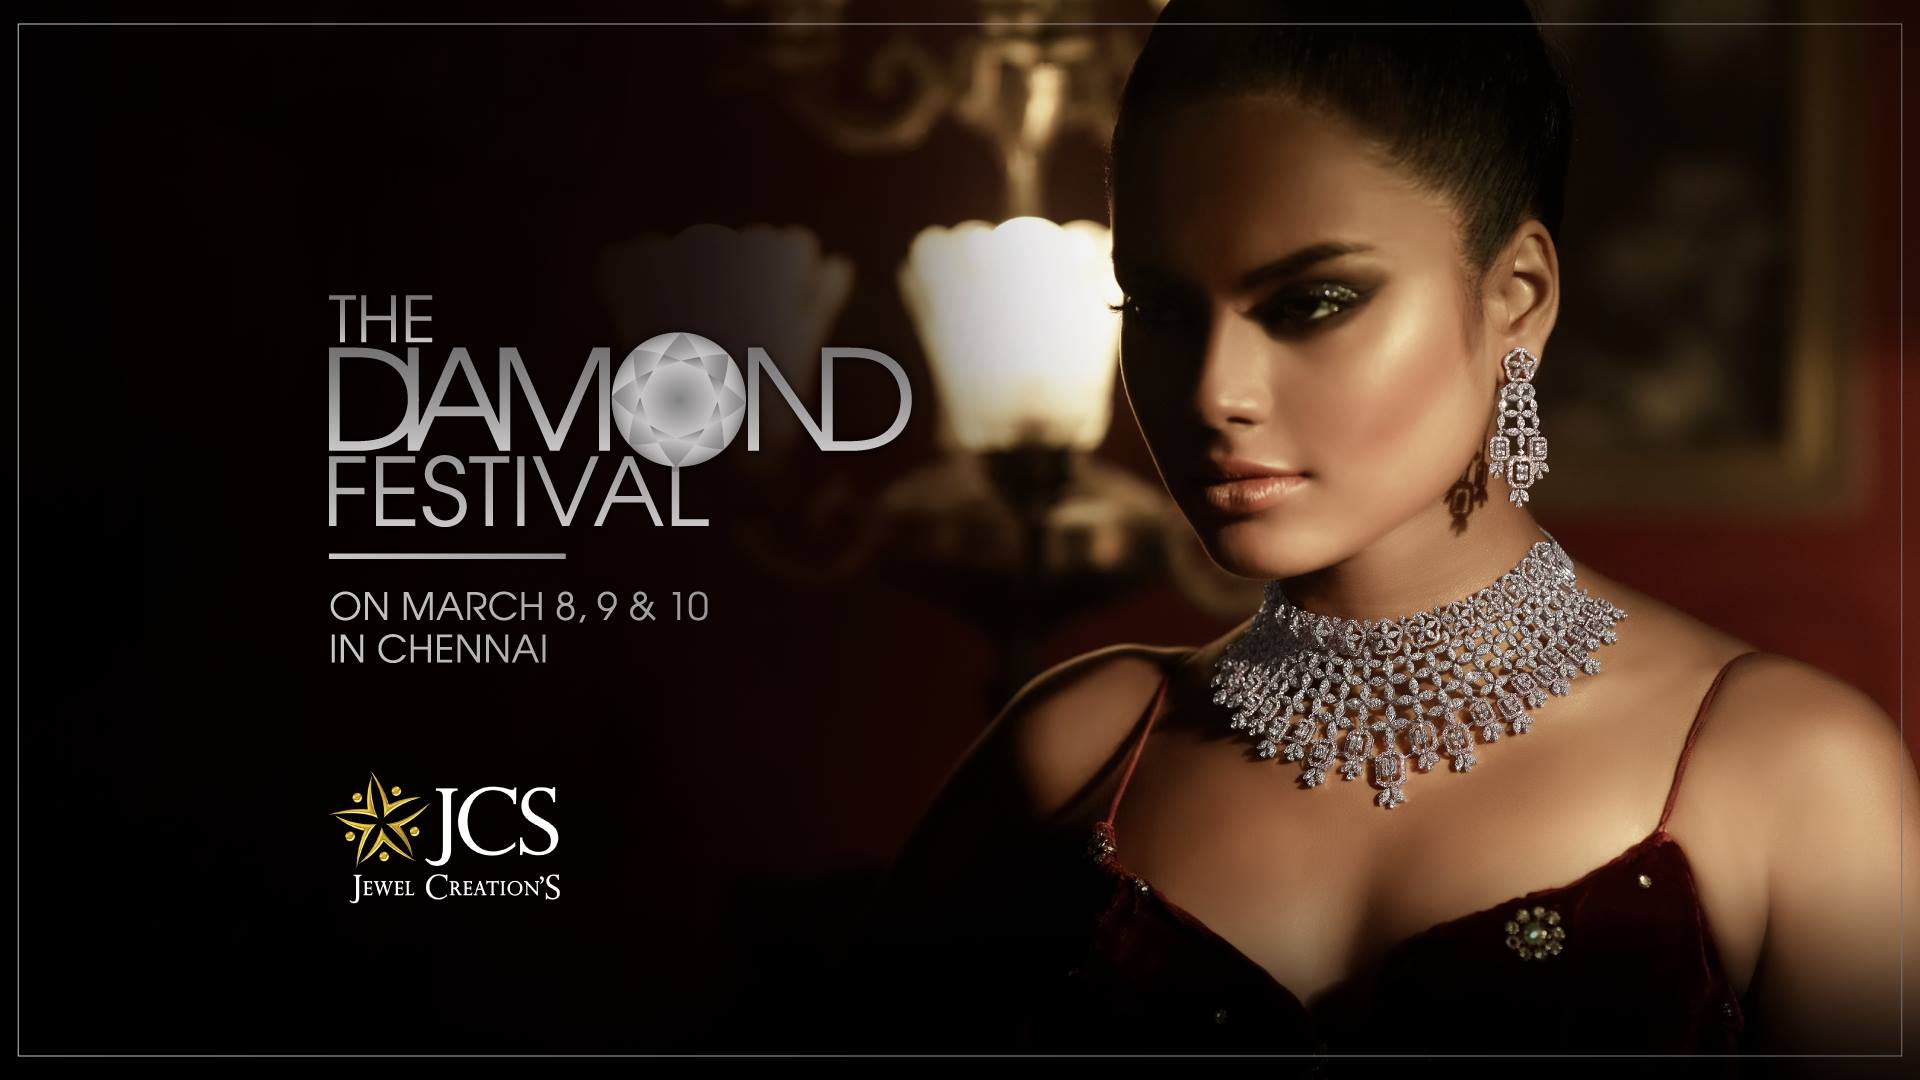 The Diamond Festival in Chennai, Chennai, Tamil Nadu, India